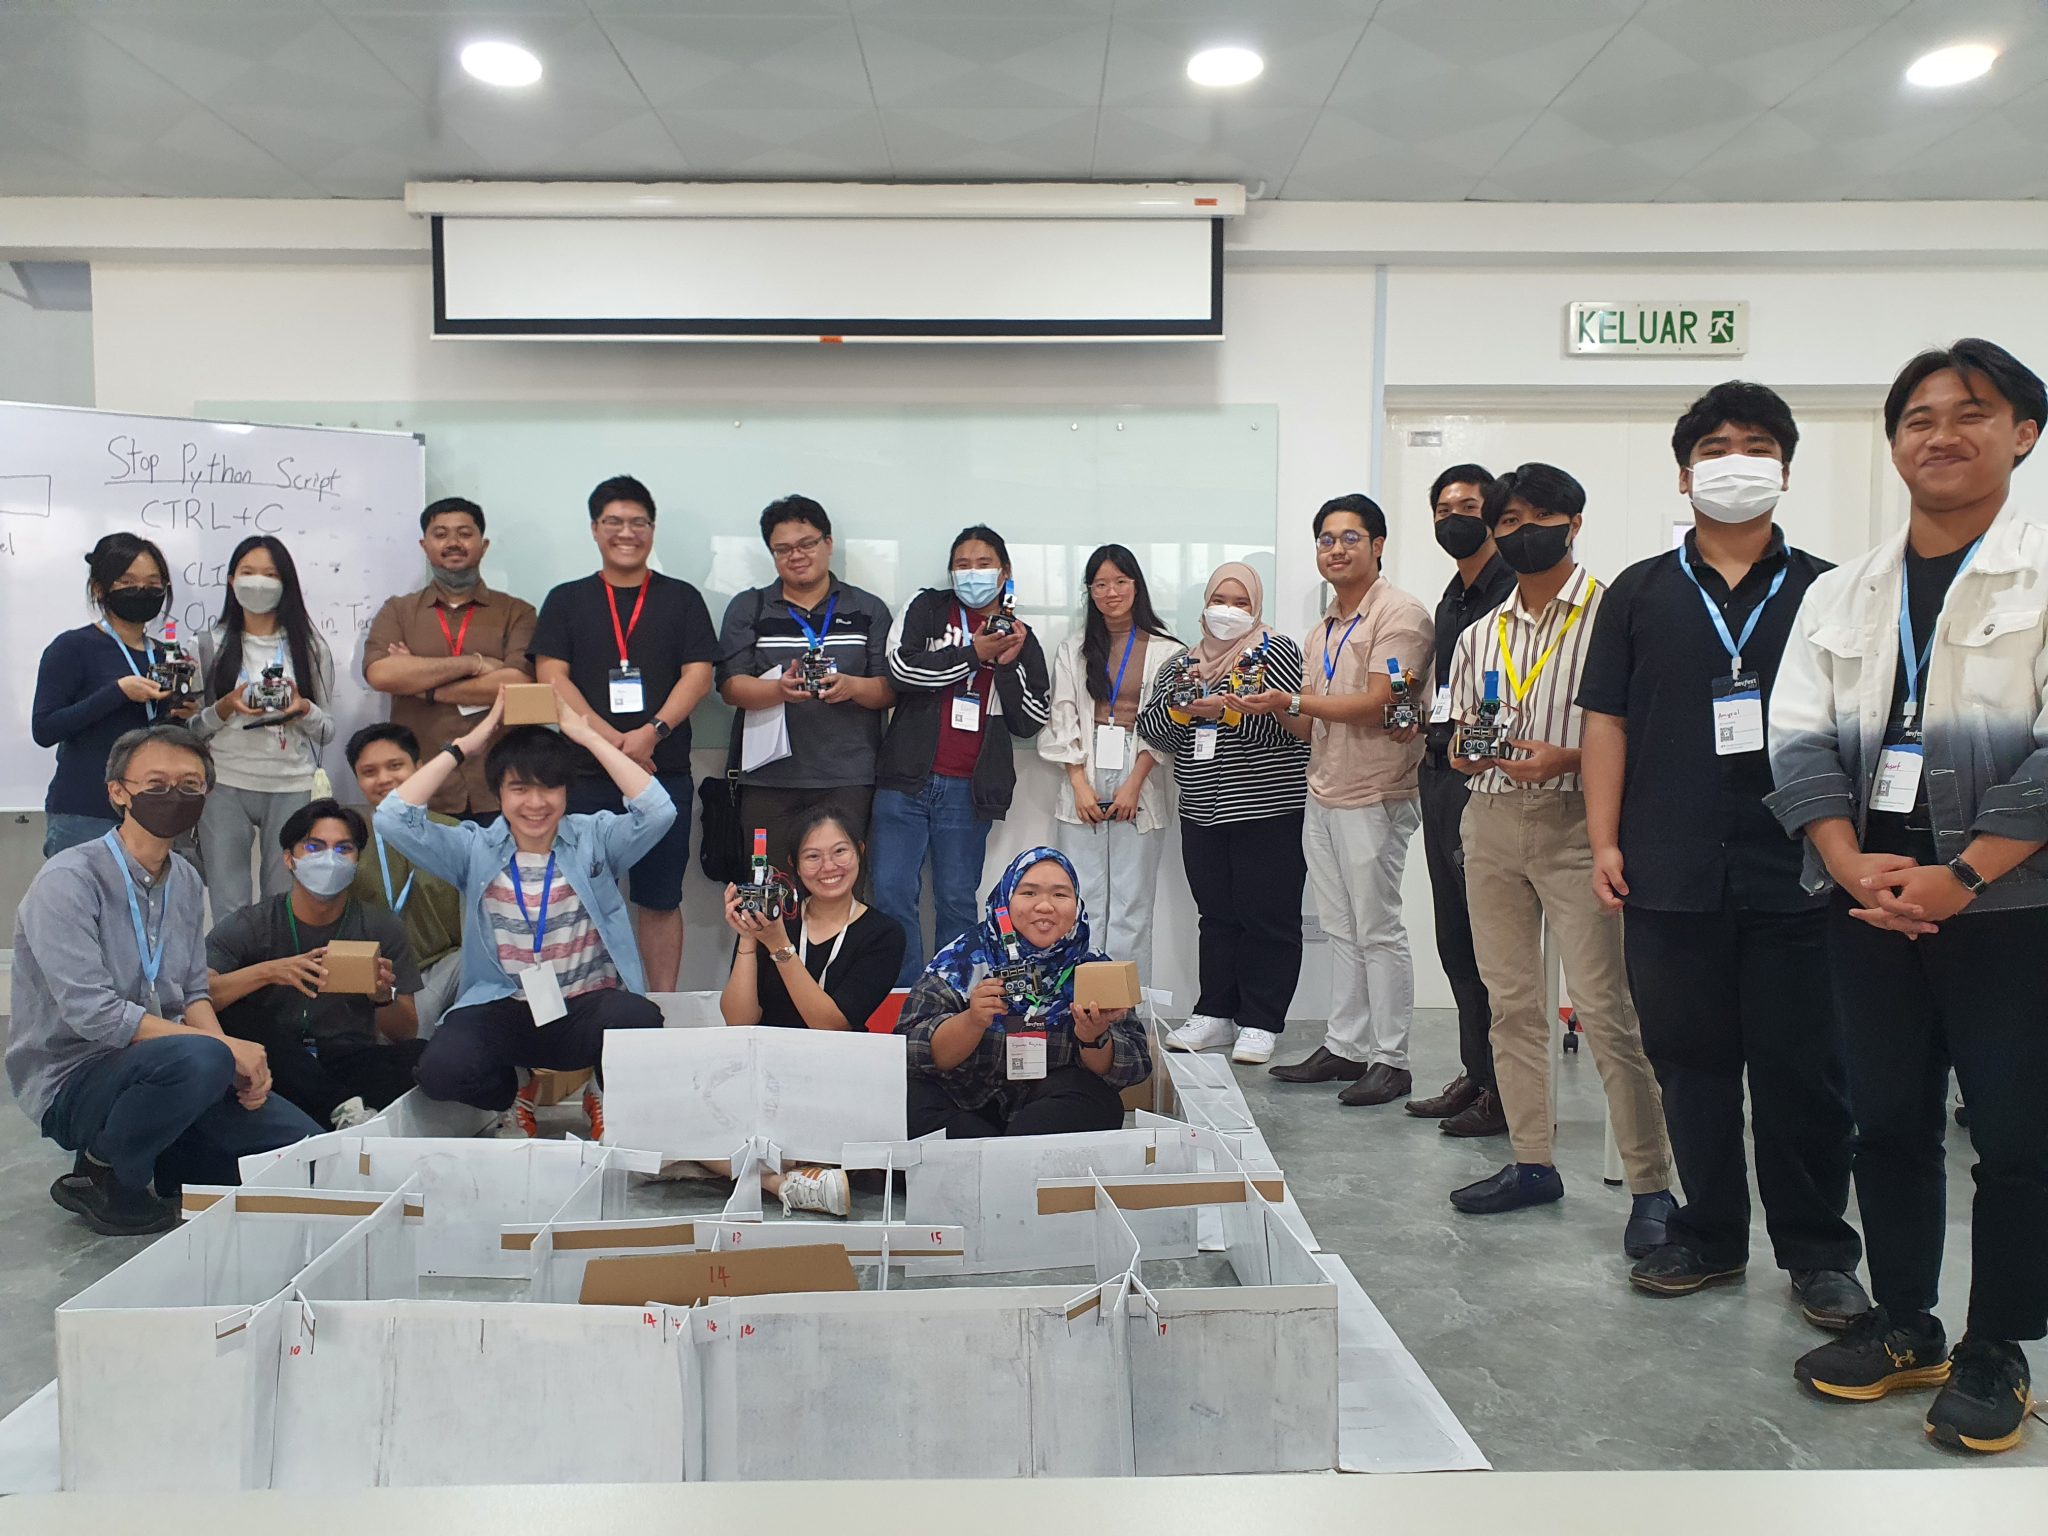 Syamimi and Hafiq’s robot programming workshop went well